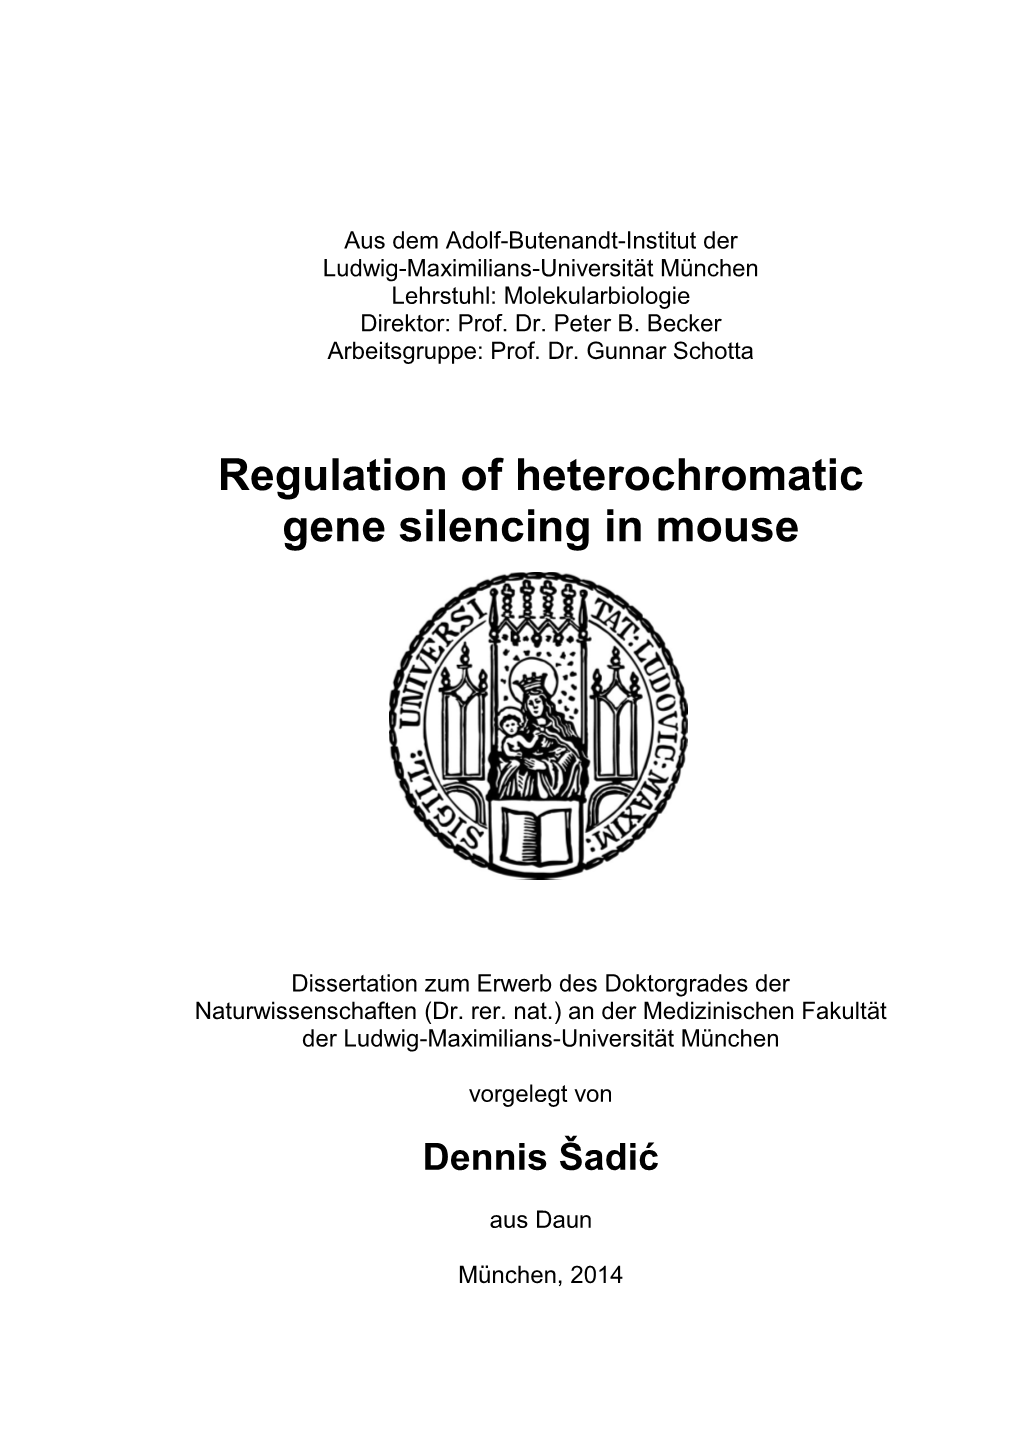 Regulation of Heterochromatic Gene Silencing in Mouse